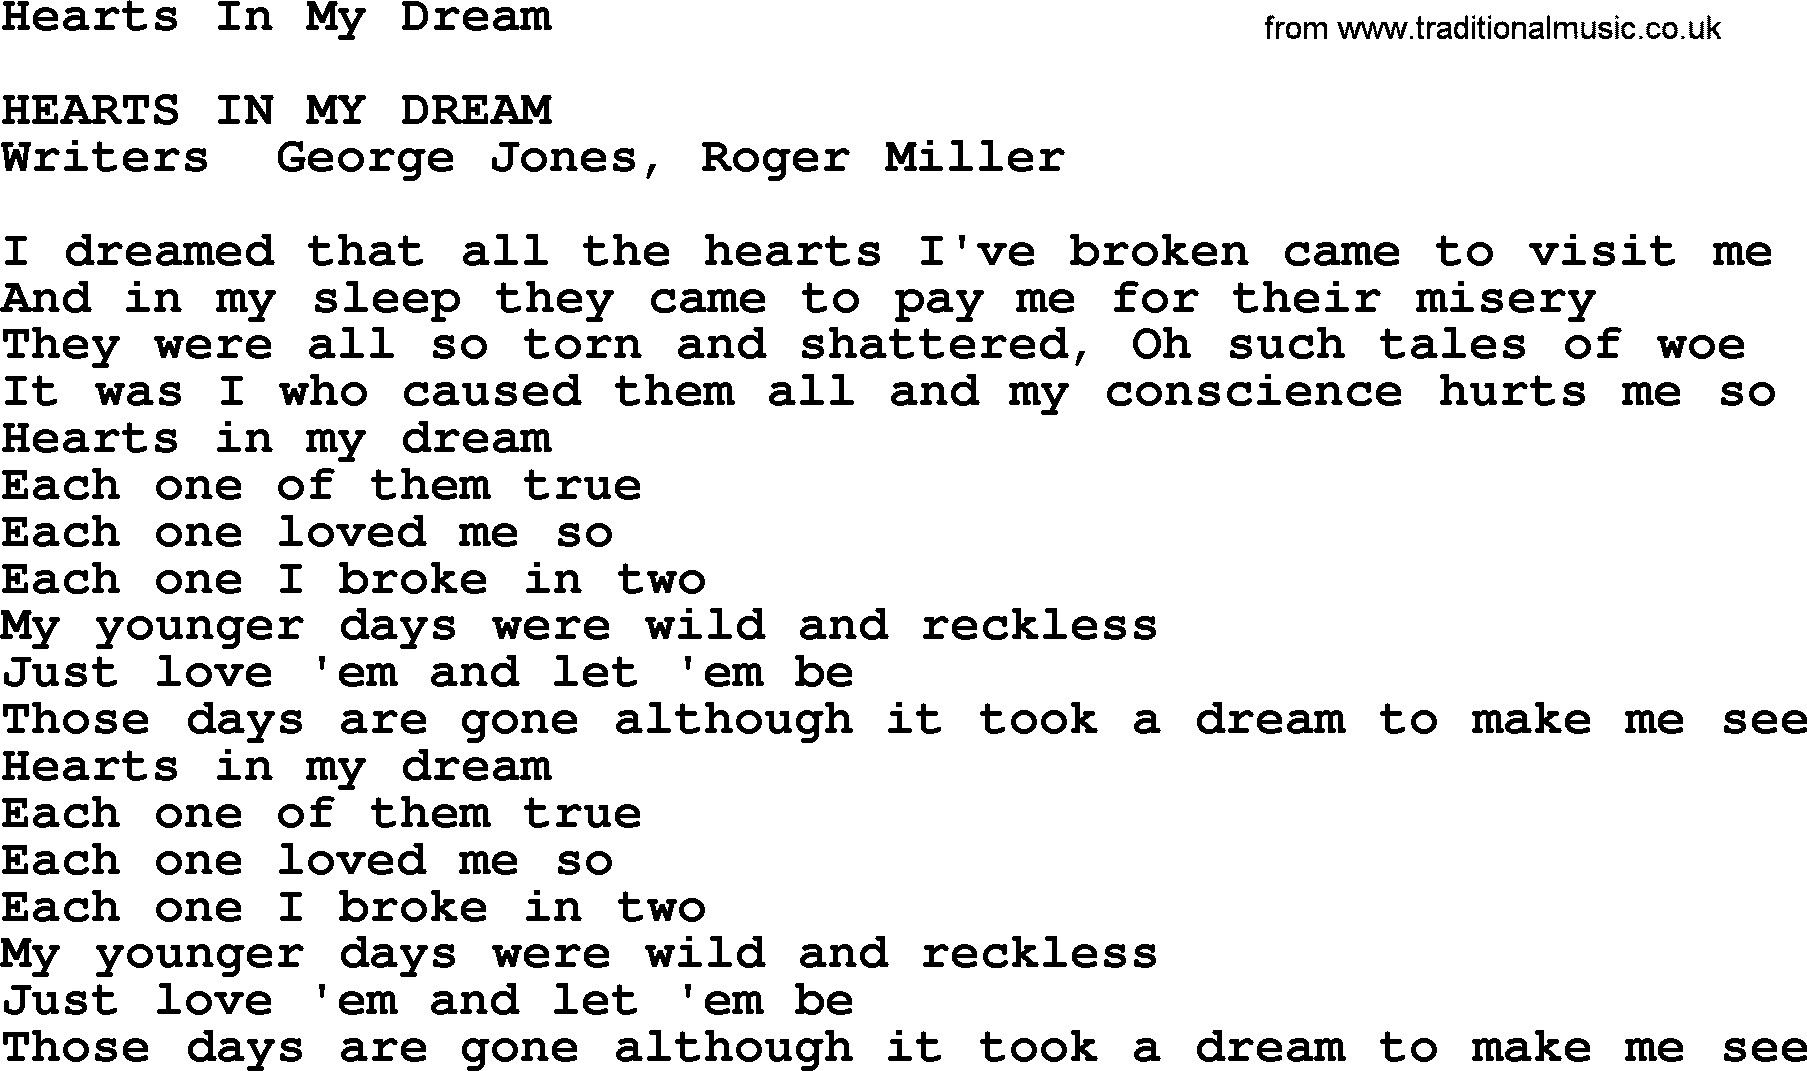 George Jones song: Hearts In My Dream, lyrics